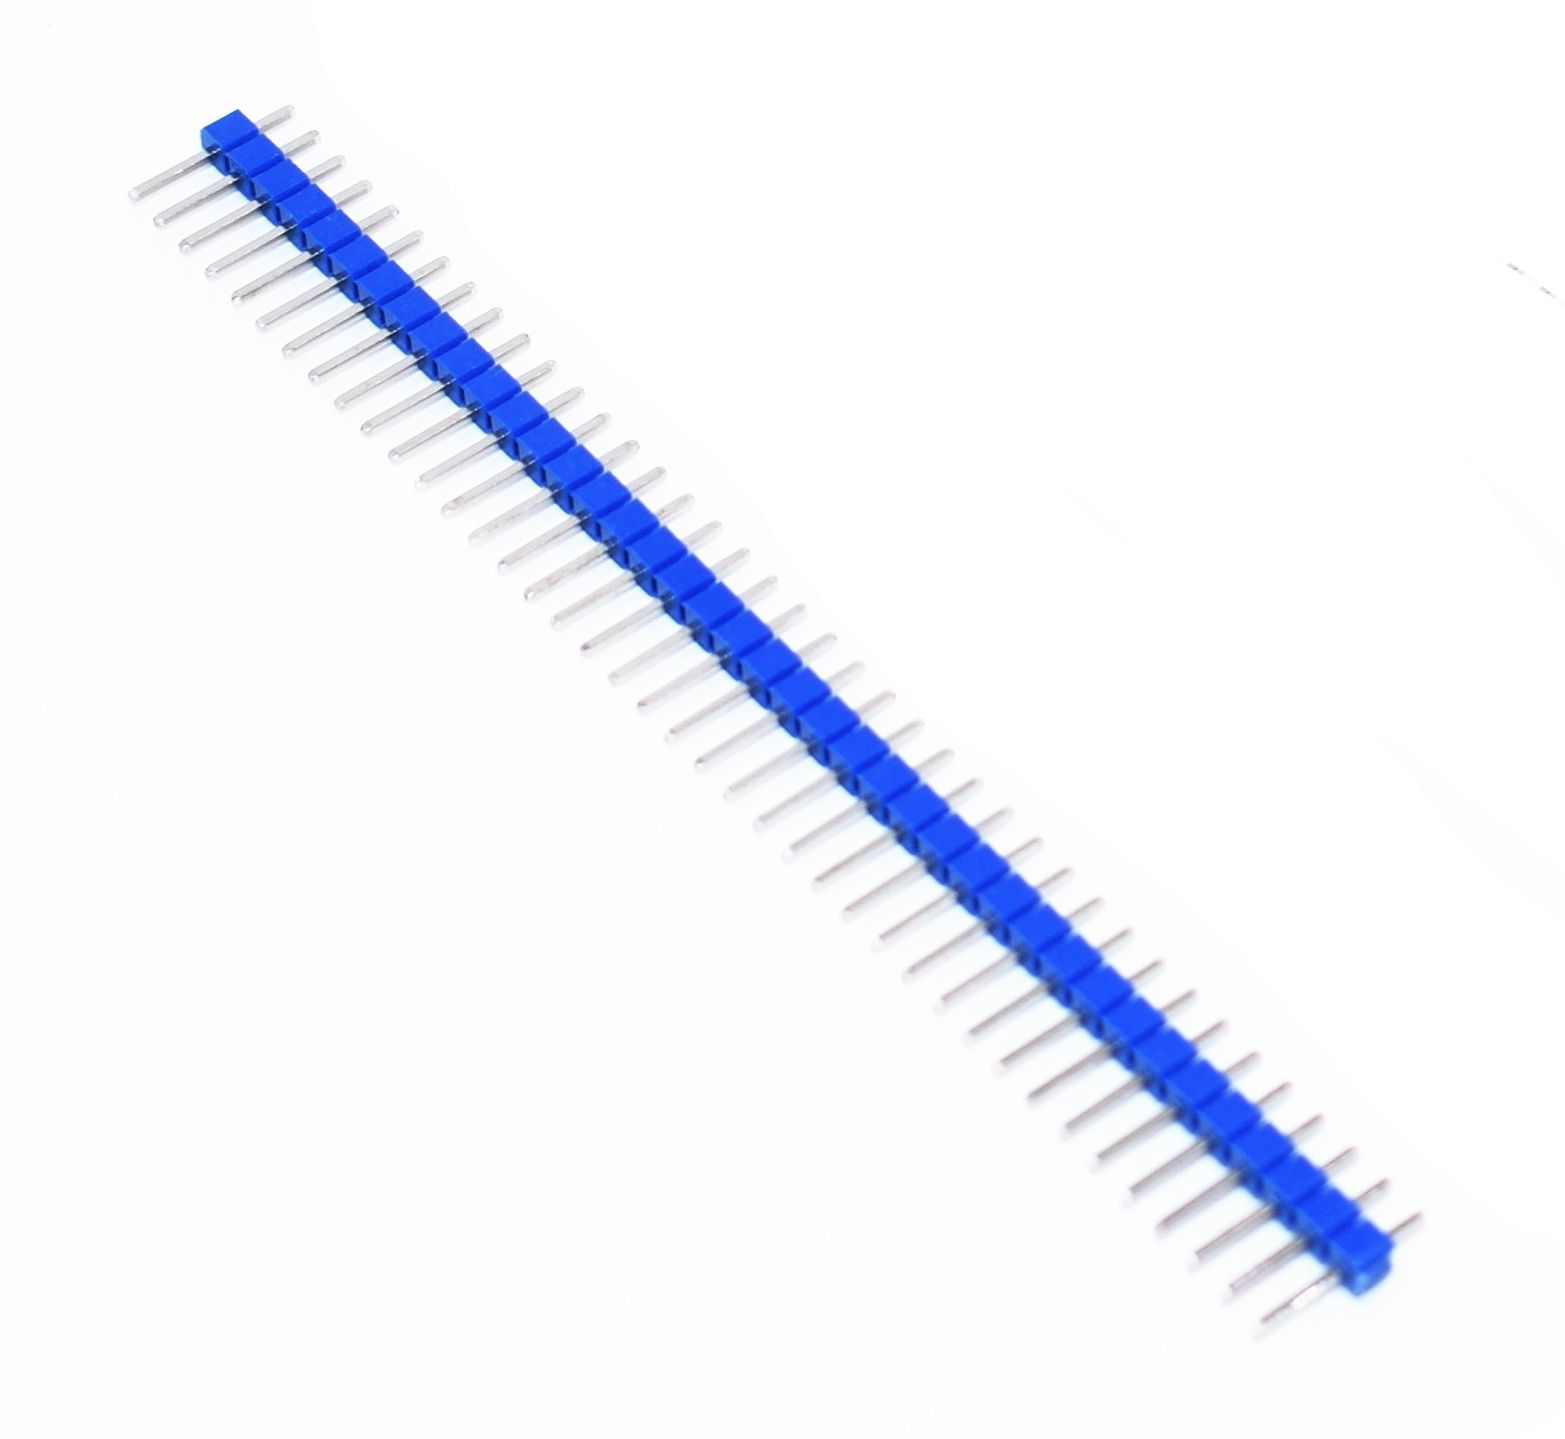 Pin header 1x40 pin 2.54mm pitch blauw